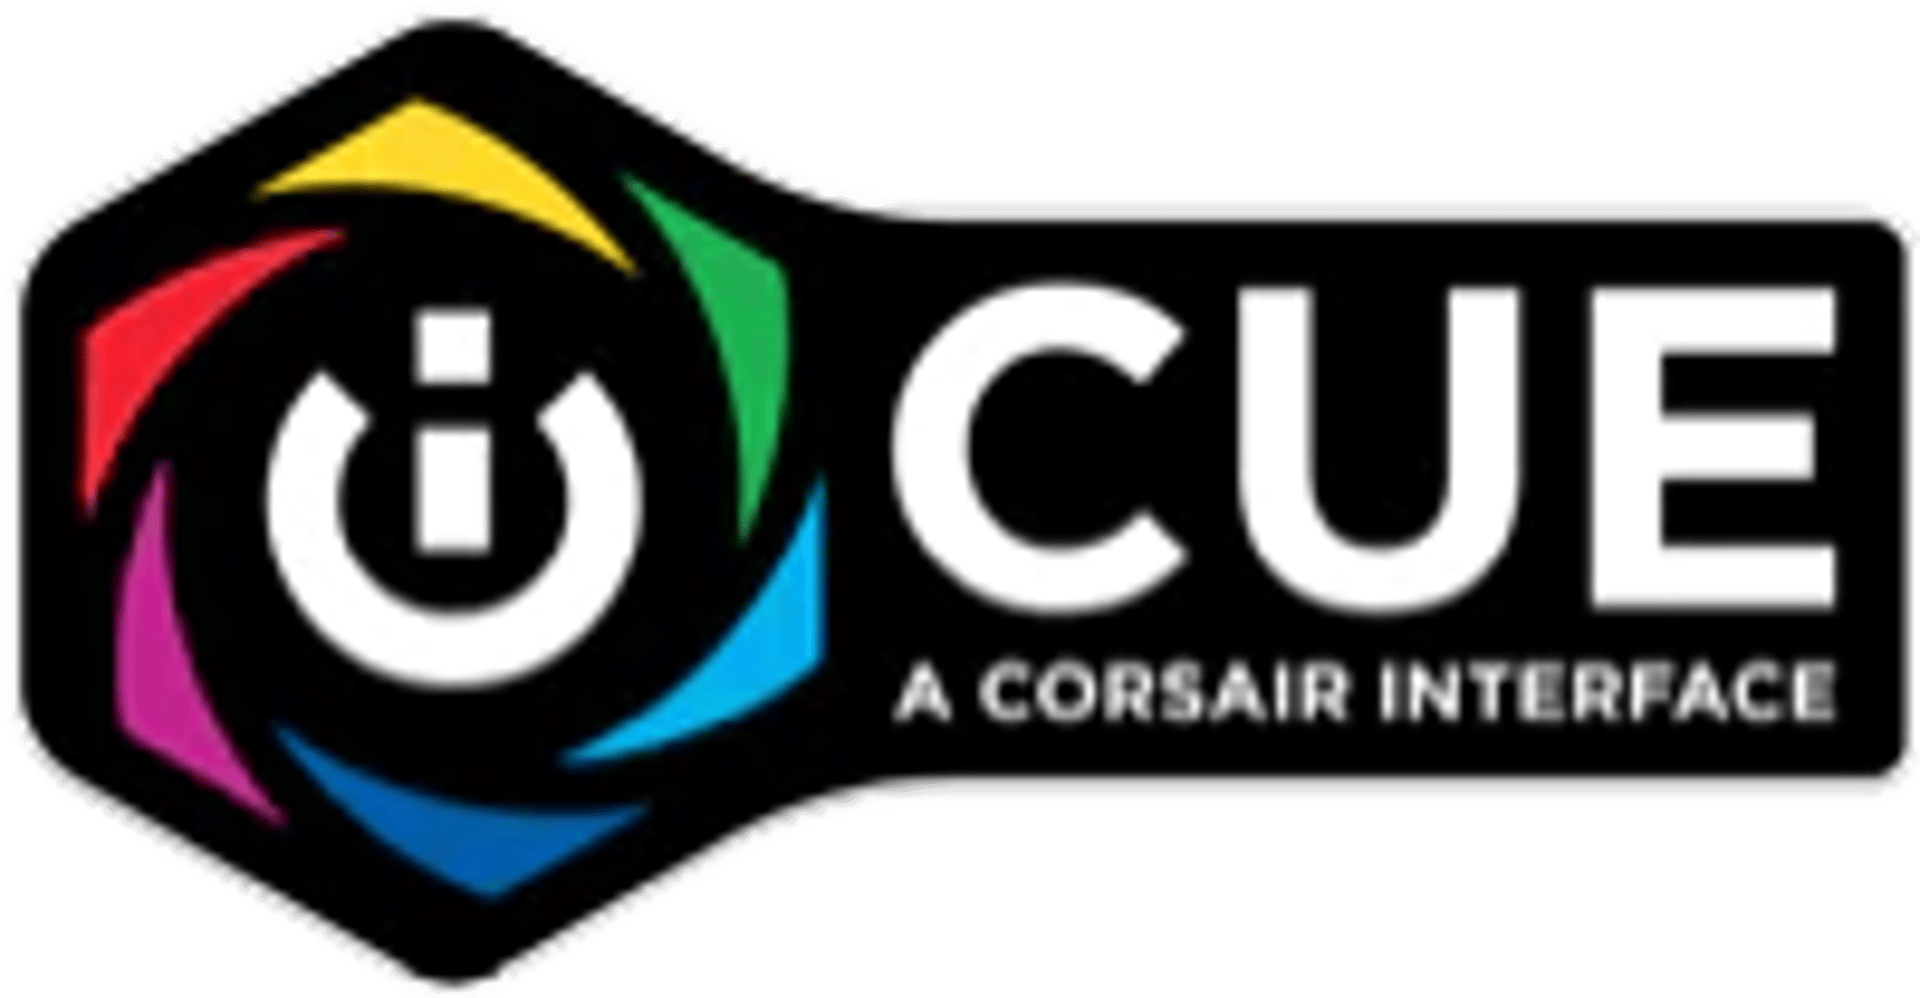 iCue Logo